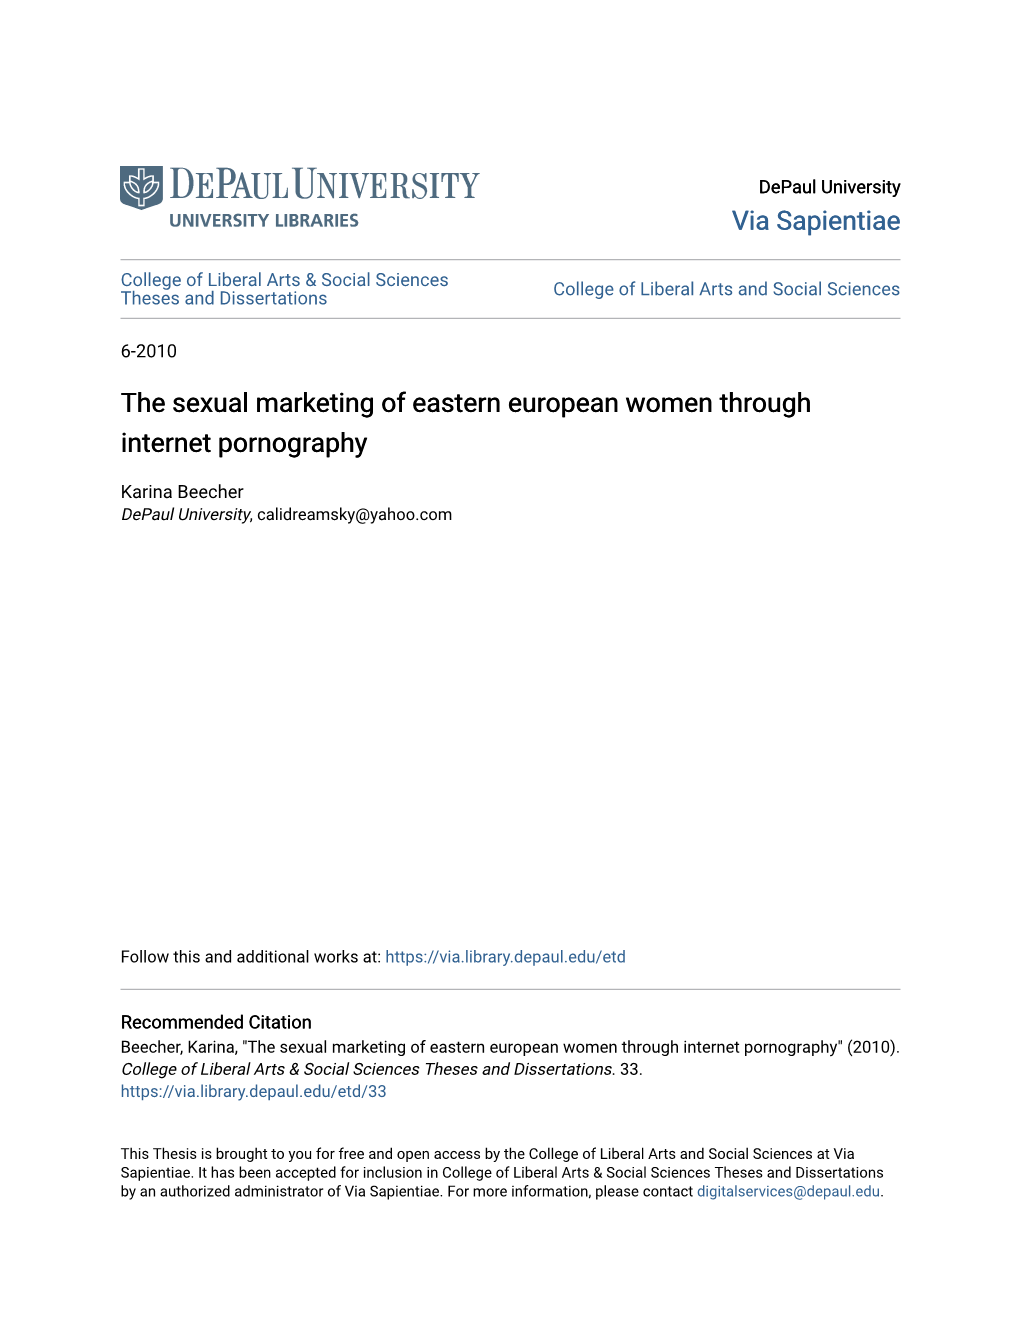 The Sexual Marketing of Eastern European Women Through Internet Pornography